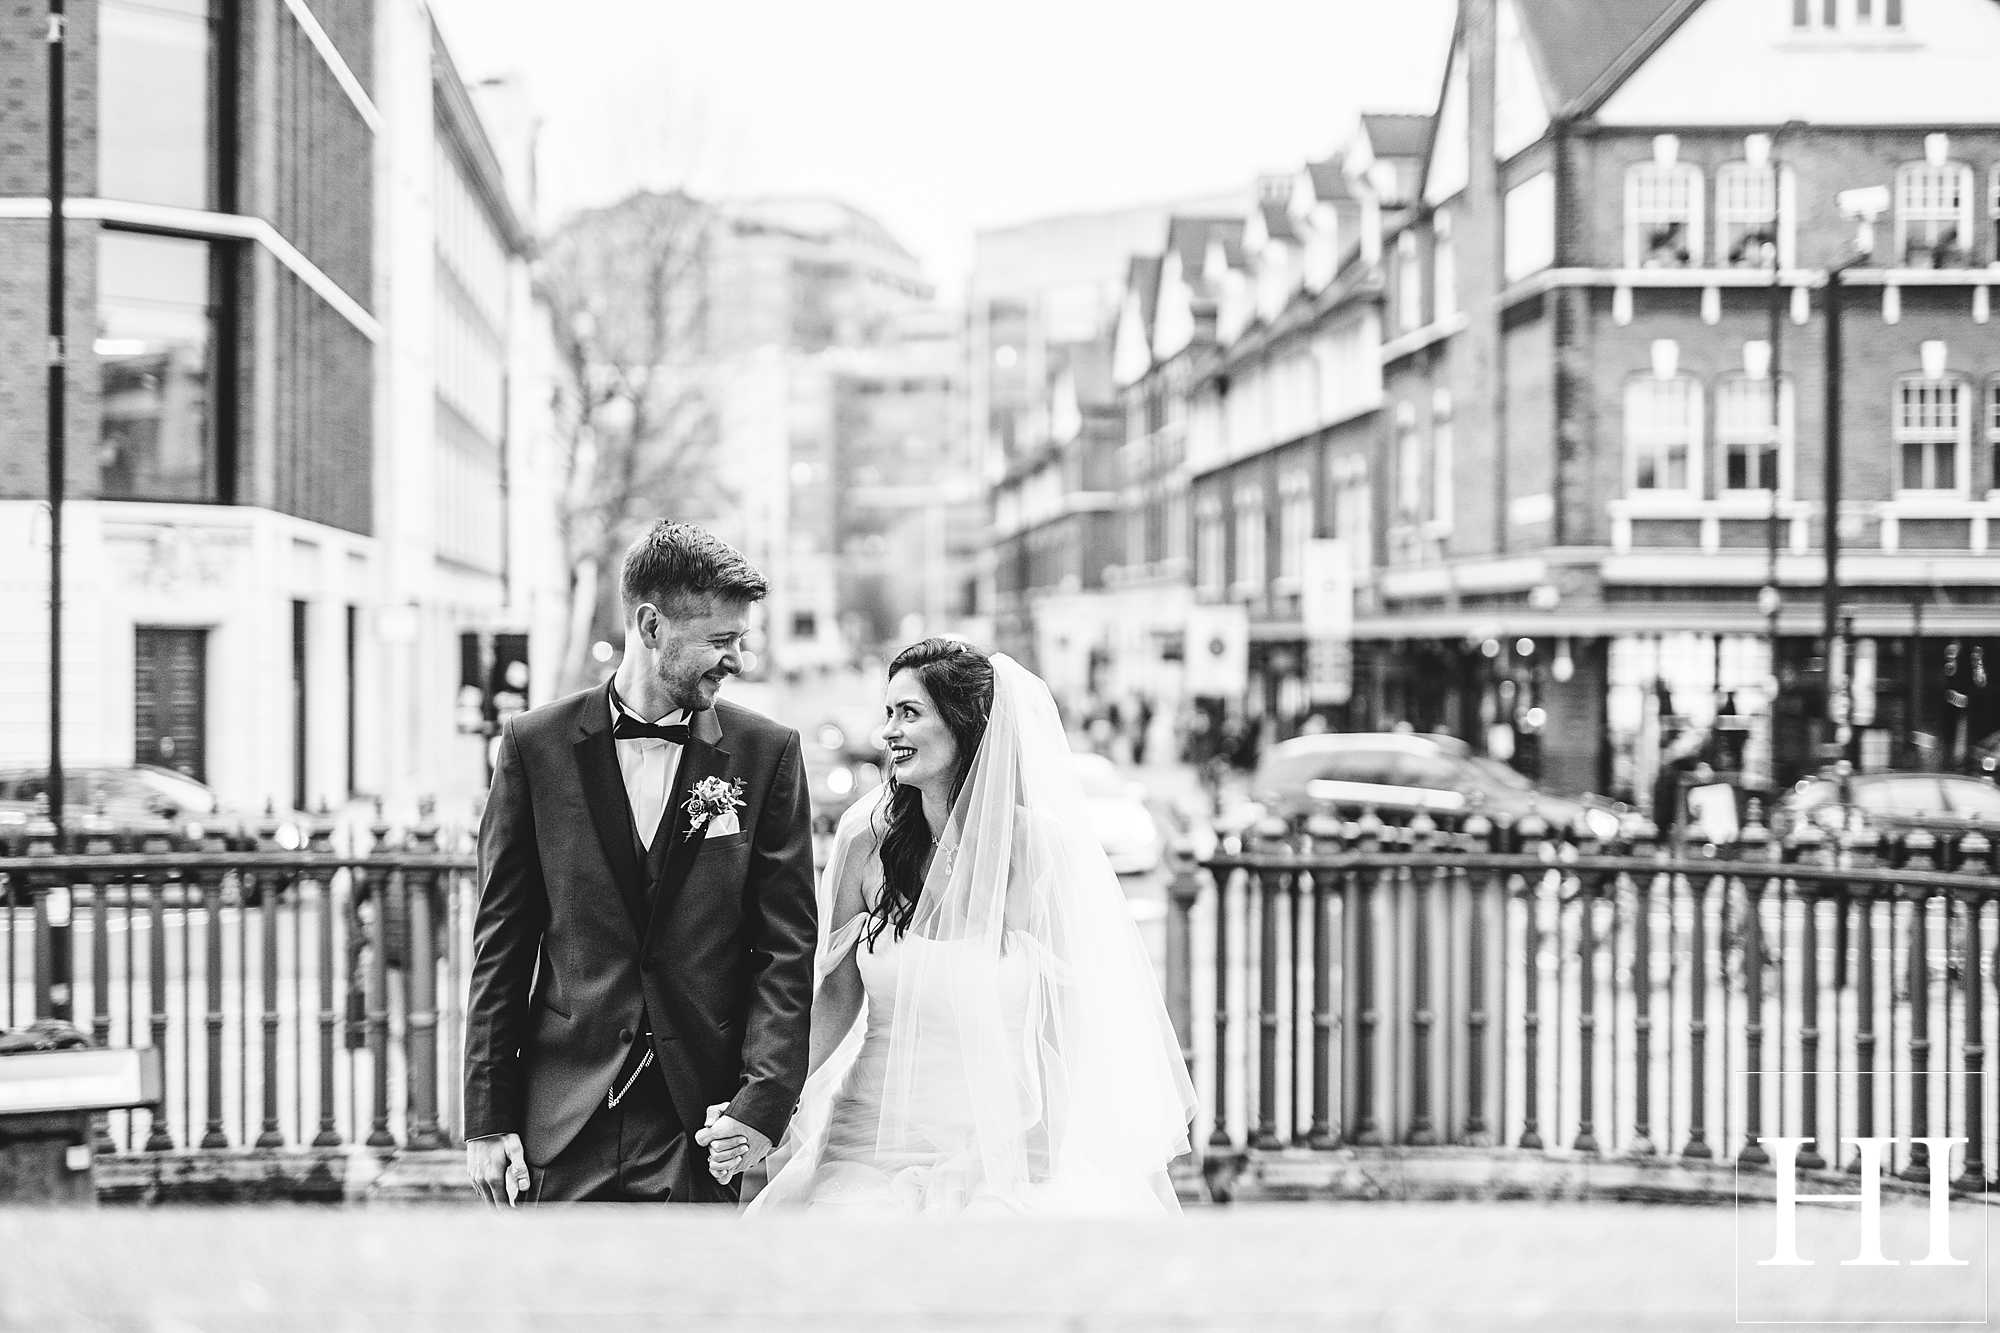 Christ Church Spitalfields Drift Bar Wedding Photography Hamish Irvine London Wedding Photographer 